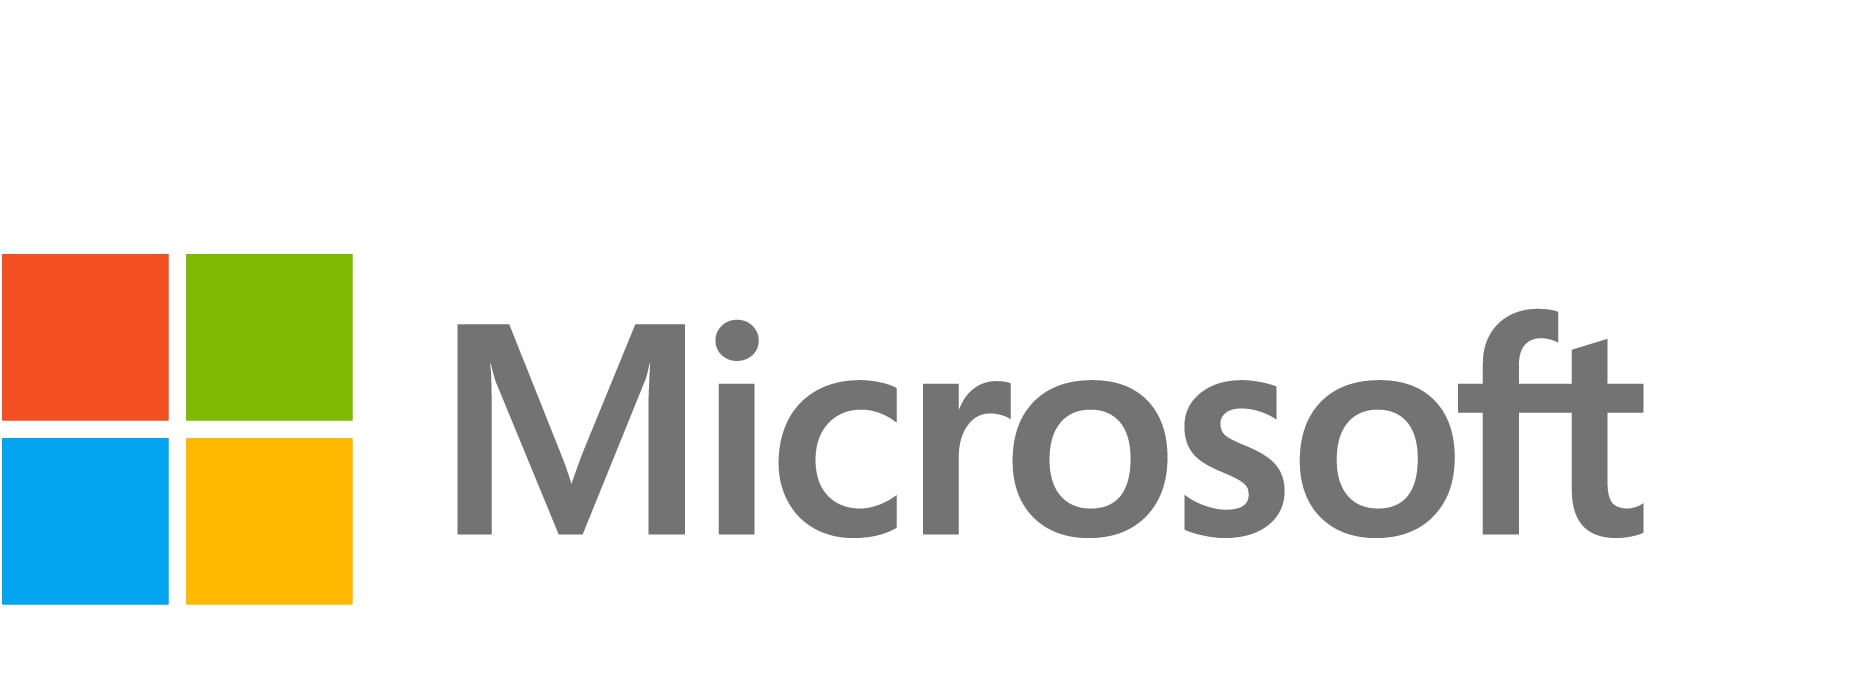 Microsoft Defender for Endpoint Plan 1 - subscription license - 1 user